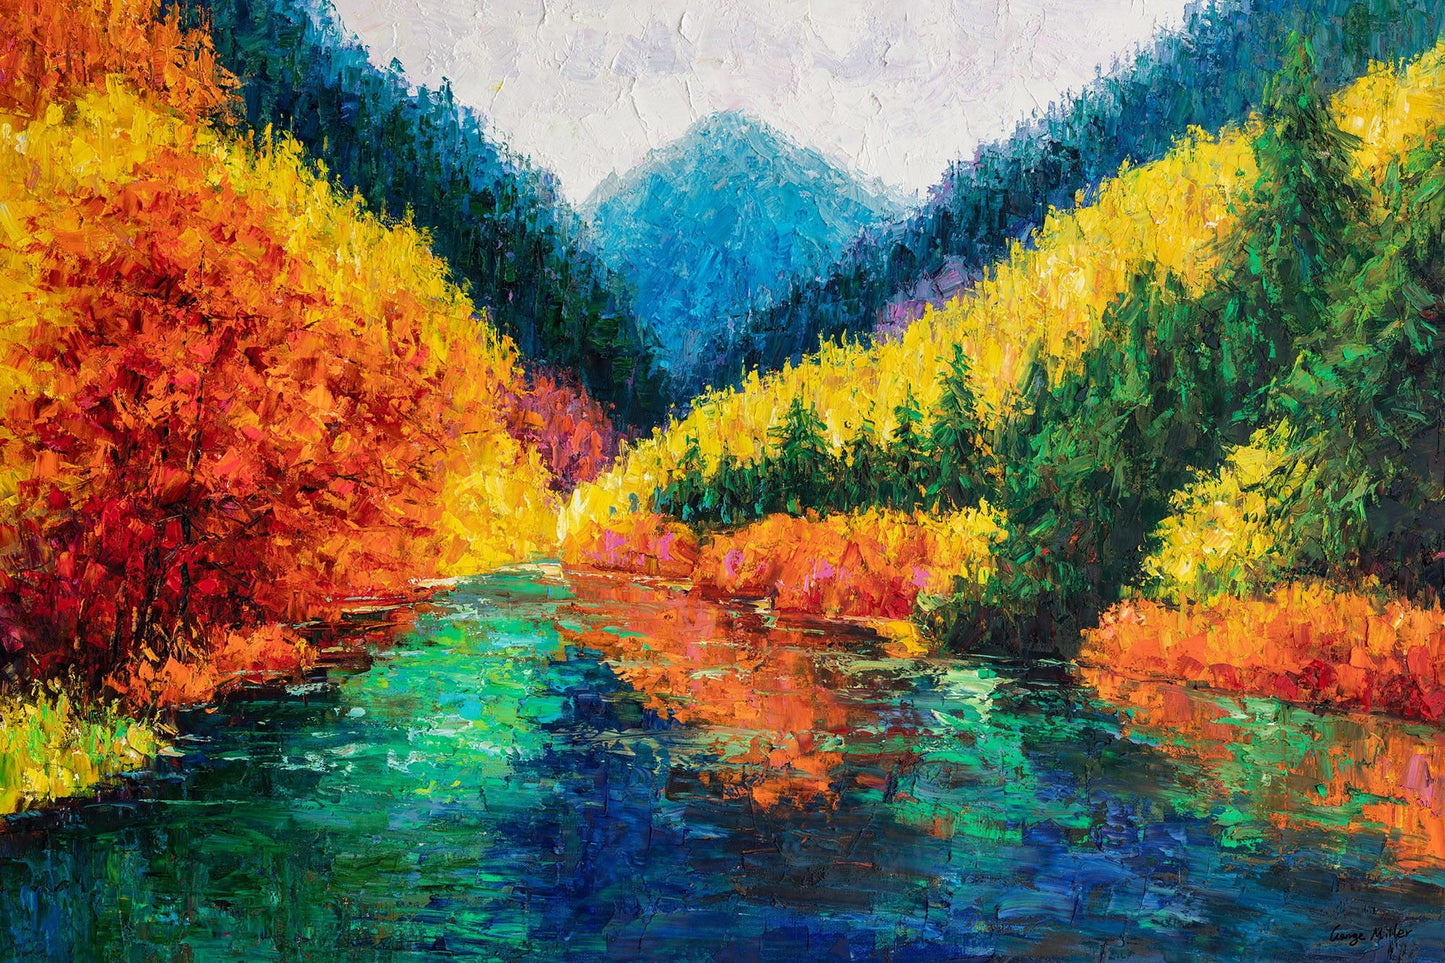 Oil Painting Autumn, Landscape Painting, Large Art, Abstract Art, Wall Art, Canvas Art, Palette Knife Painting, Large Canvas Wall Art